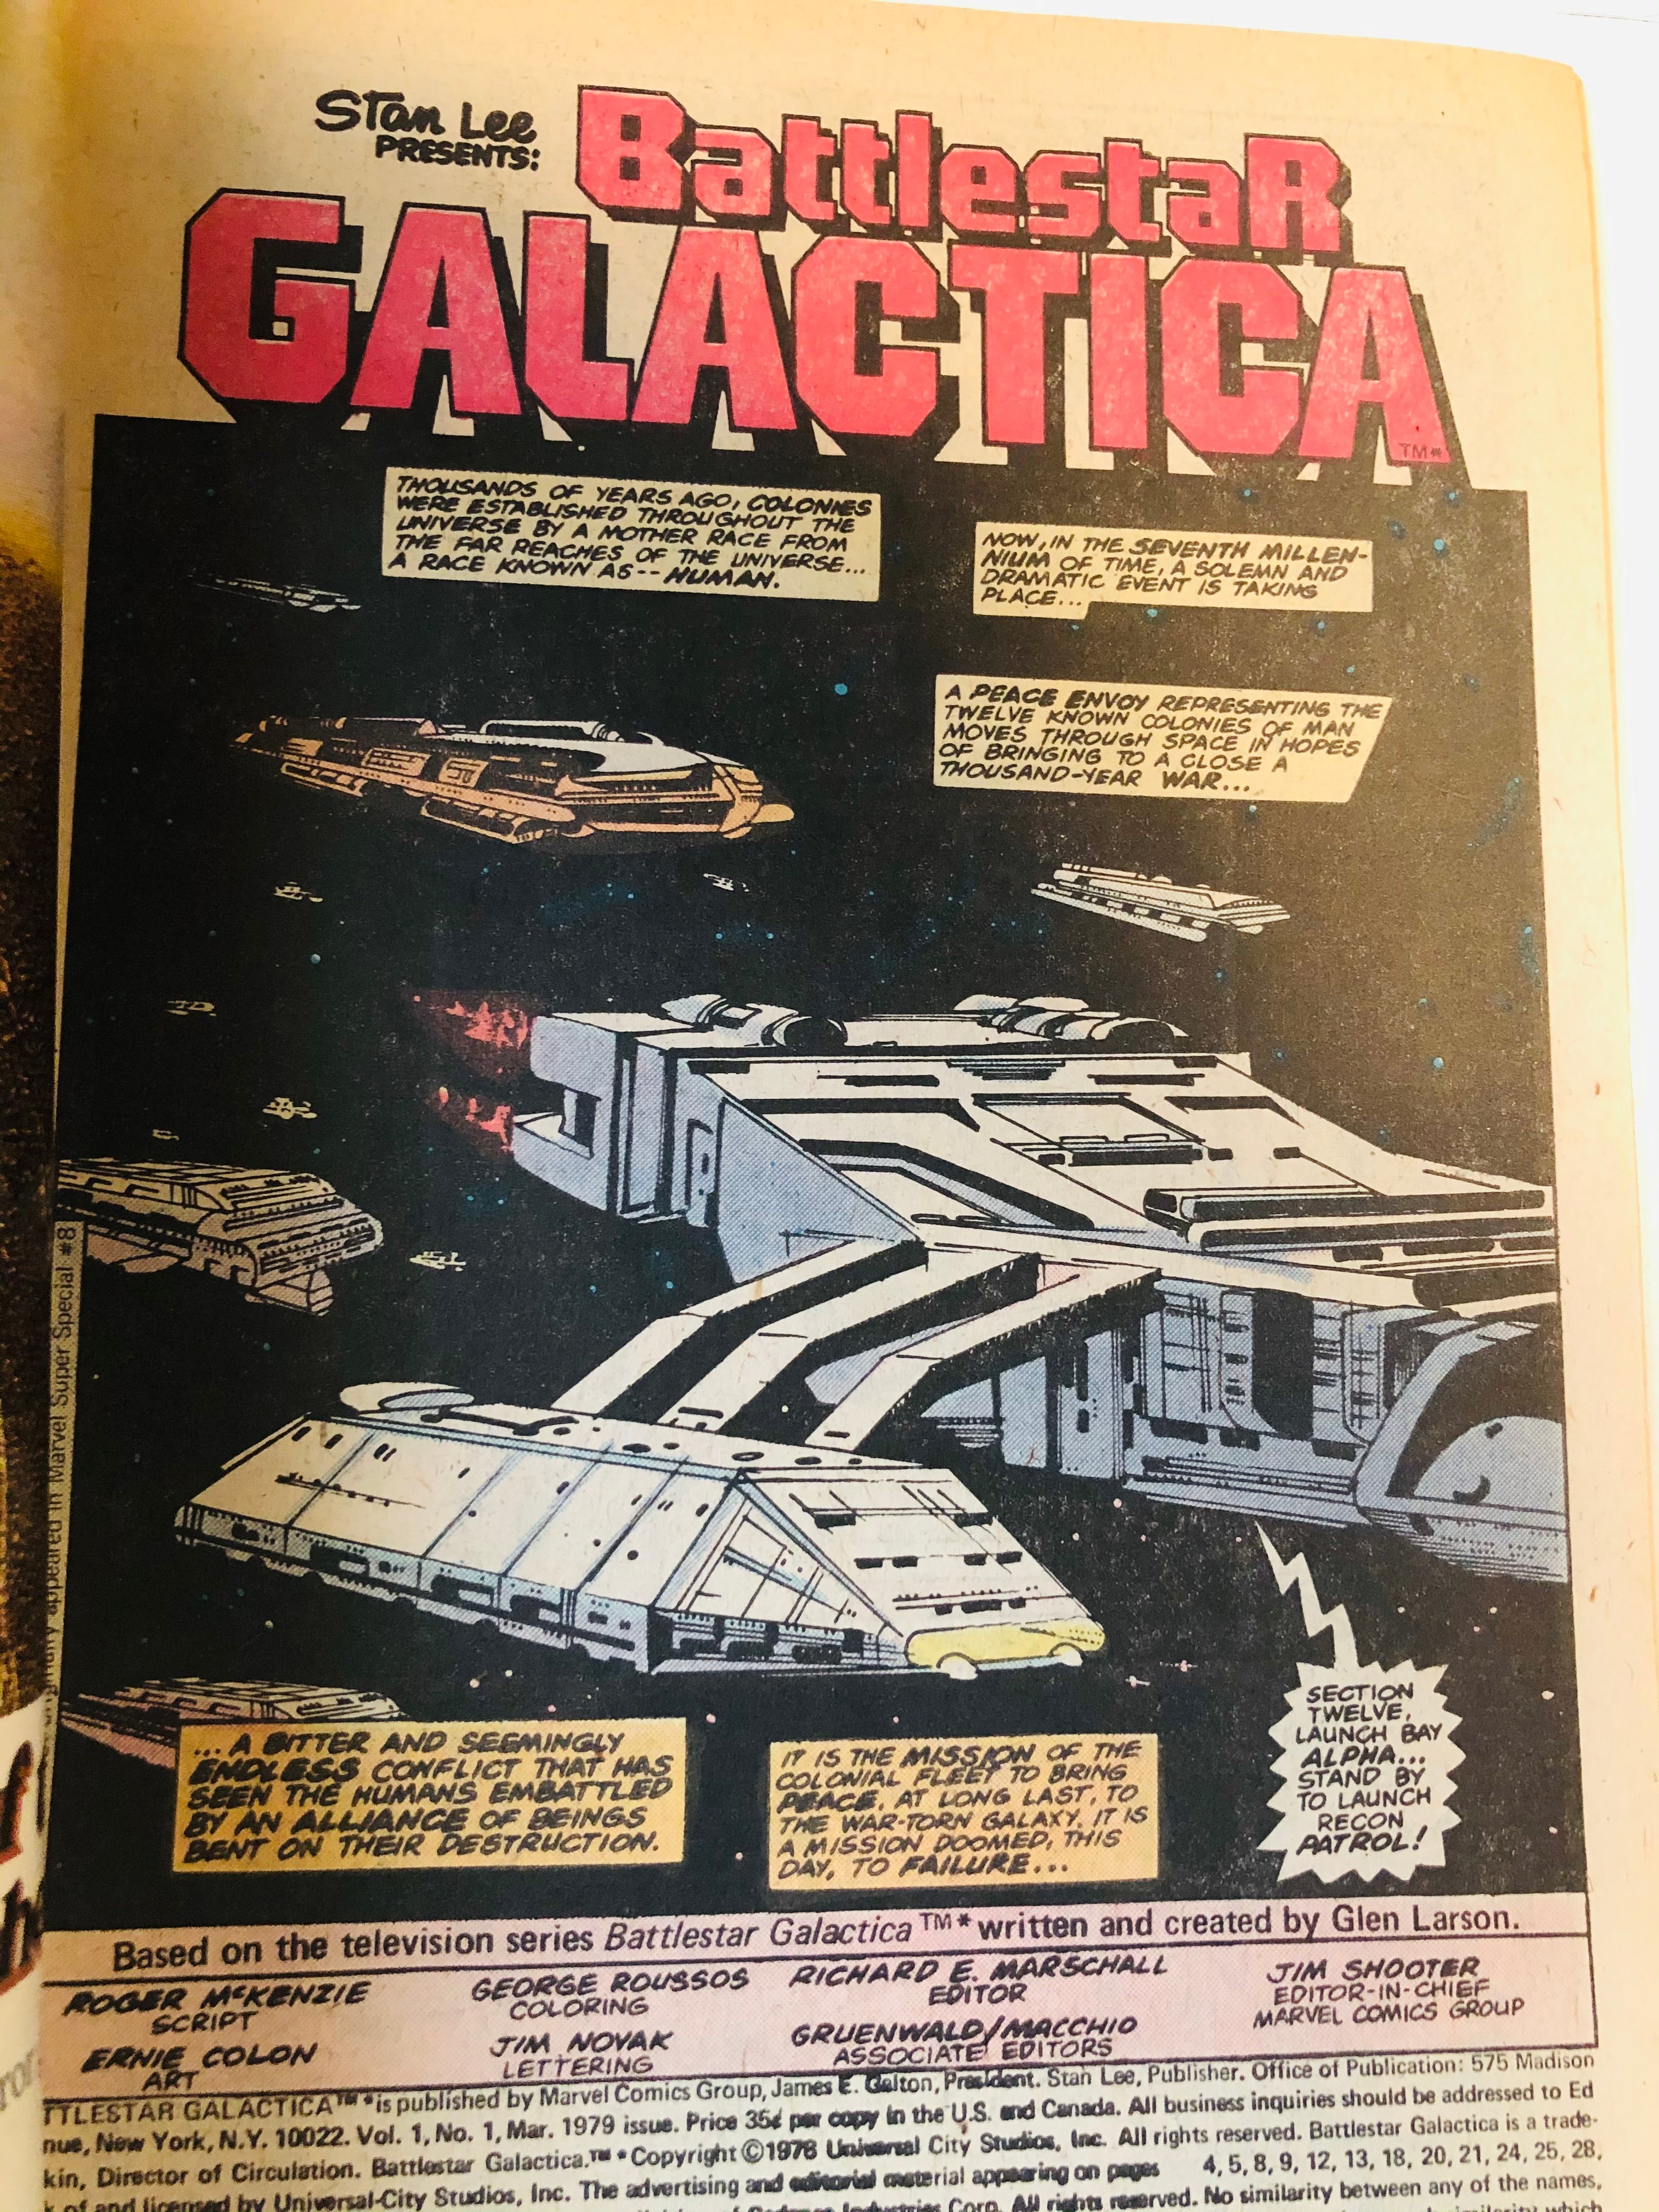 Battlestar Galactica #1 VF/ NM comic book 1978